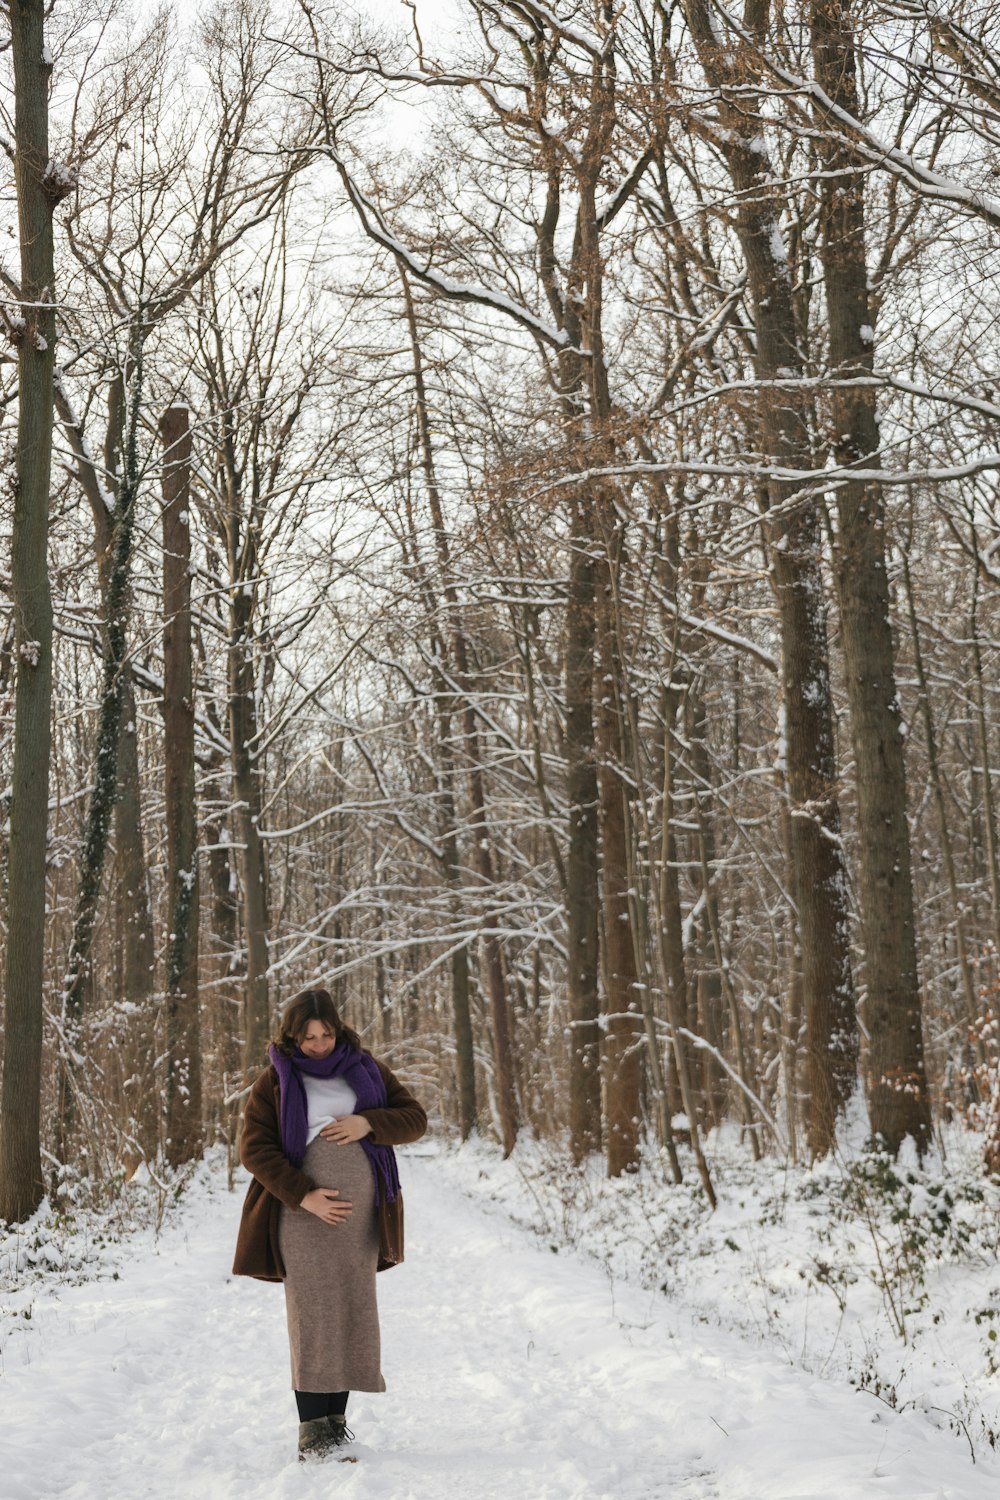 a pregnant woman walking through a snowy forest